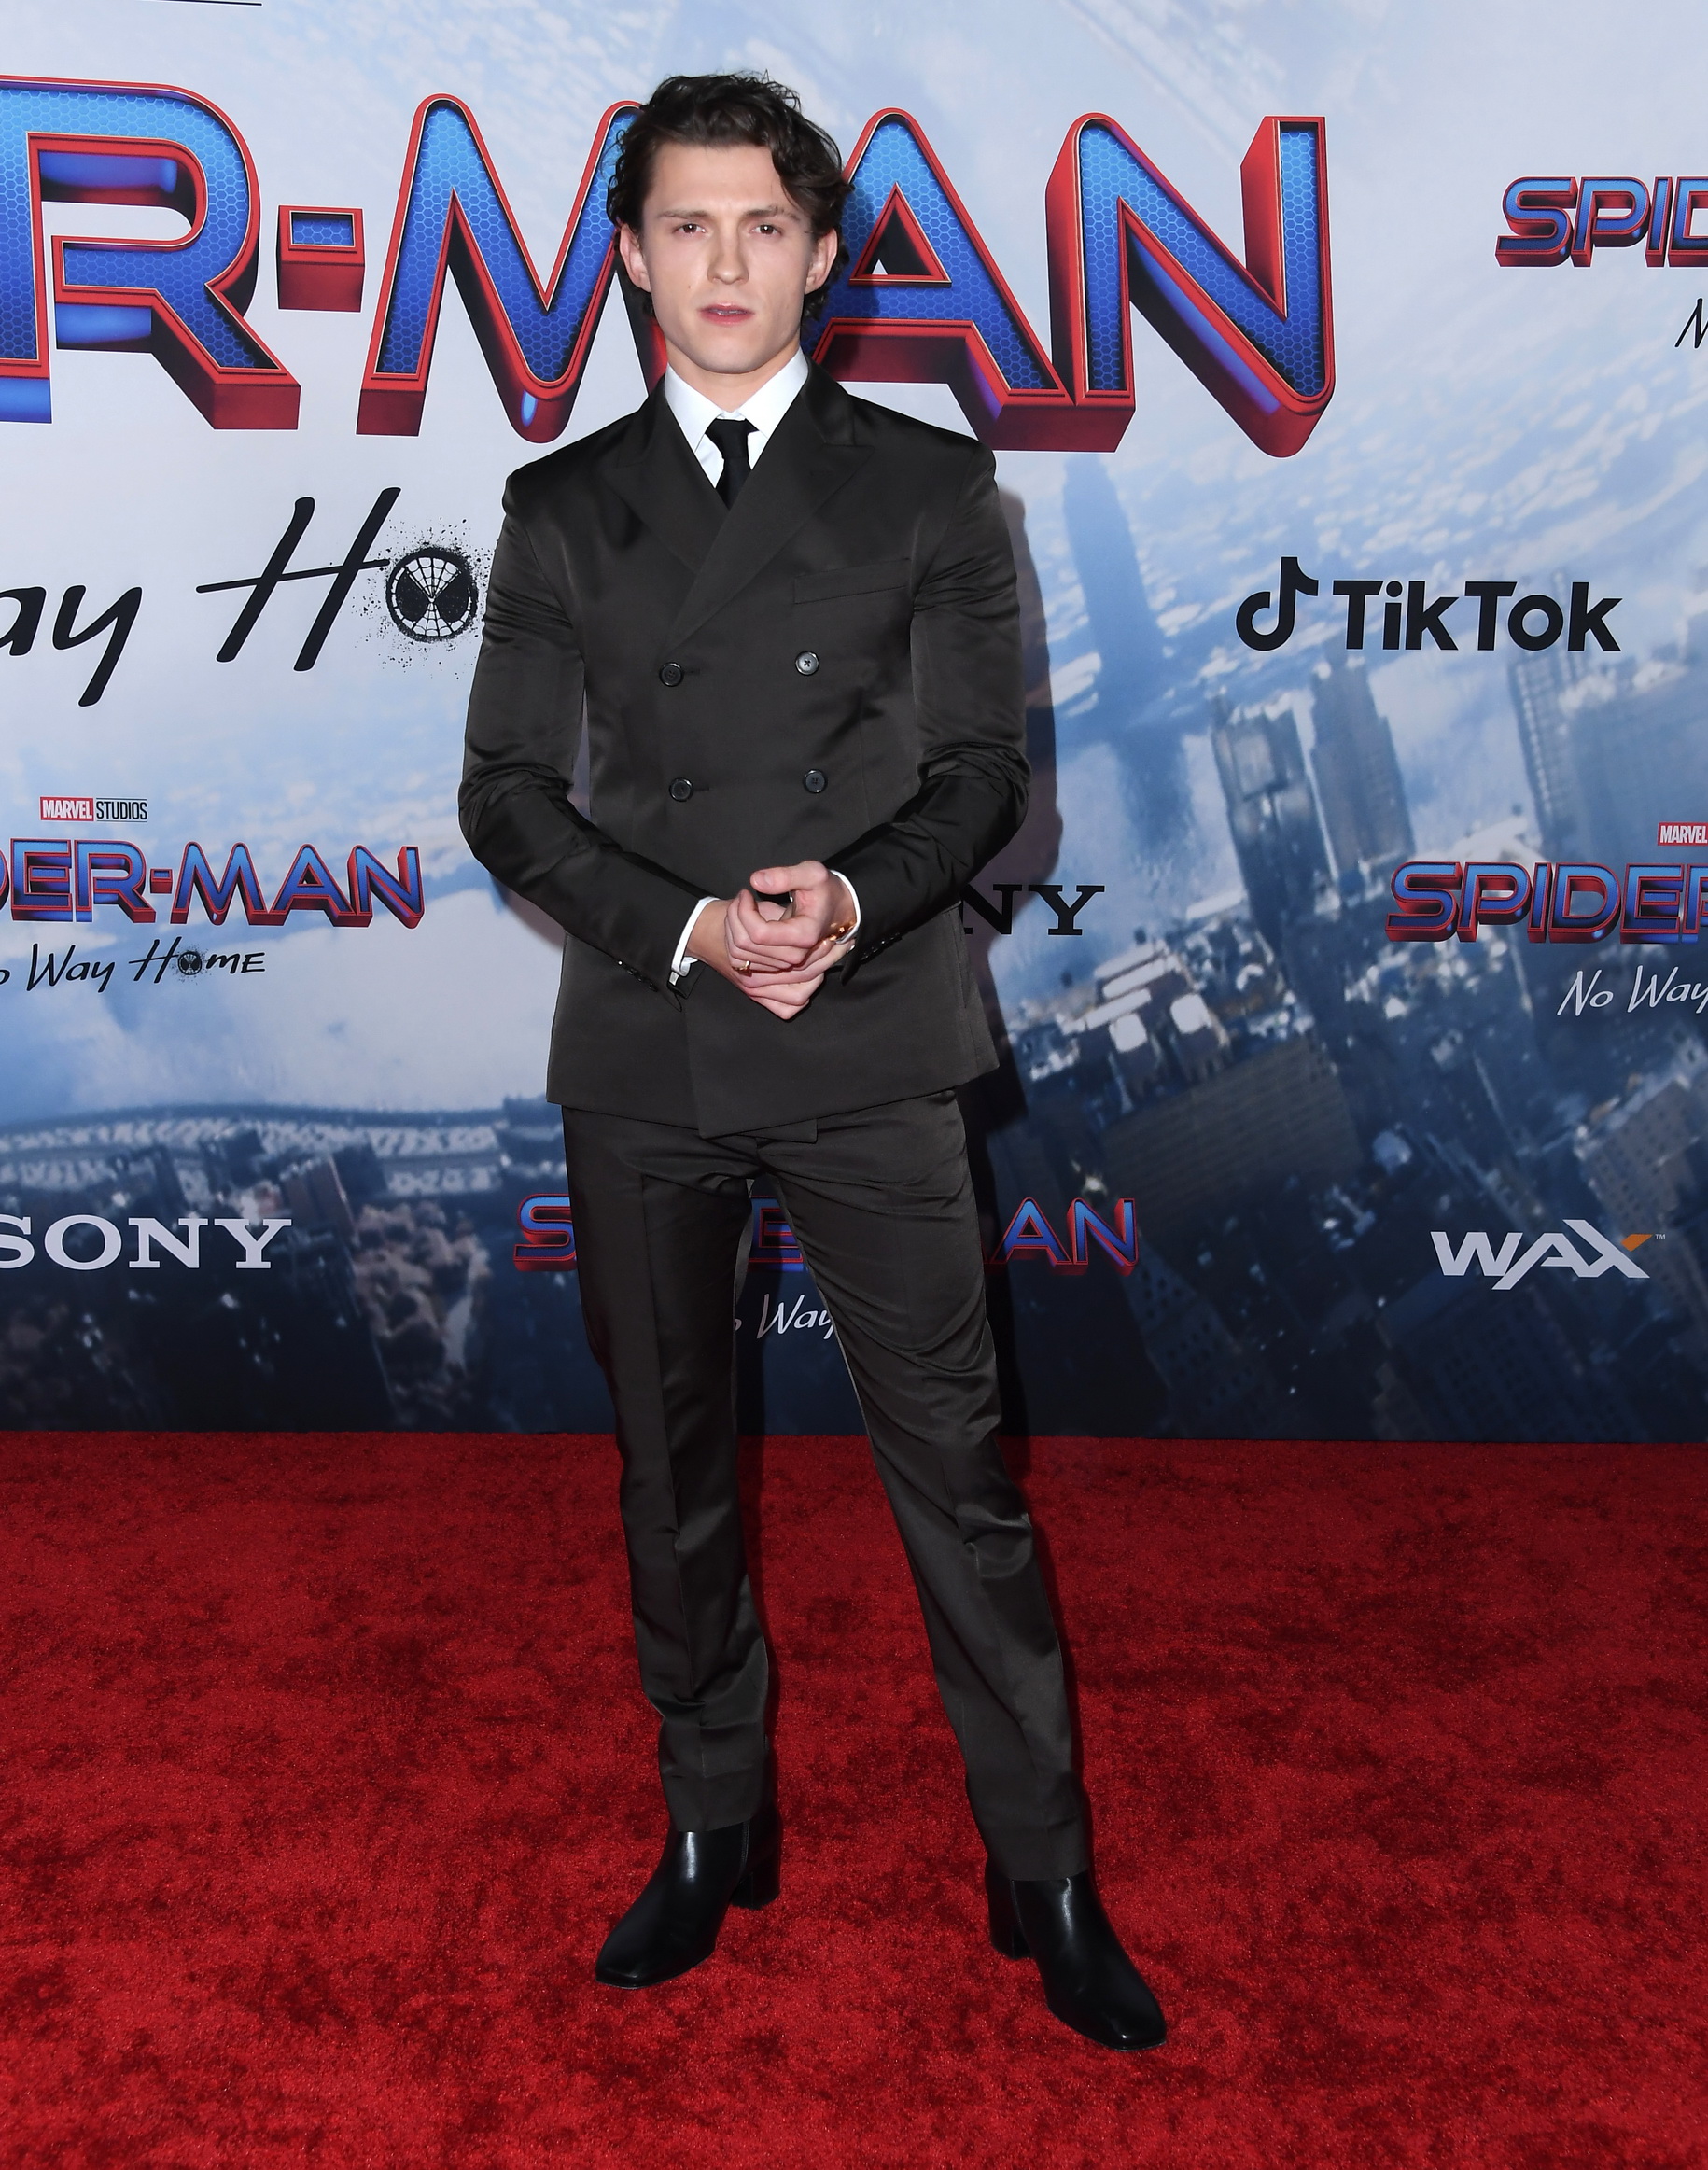 Rijden Verwacht het defect Tom Holland wore custom PRADA suit @ the Spider-Man: No Way Home premiere  in Los Angeles | Digital Magazine